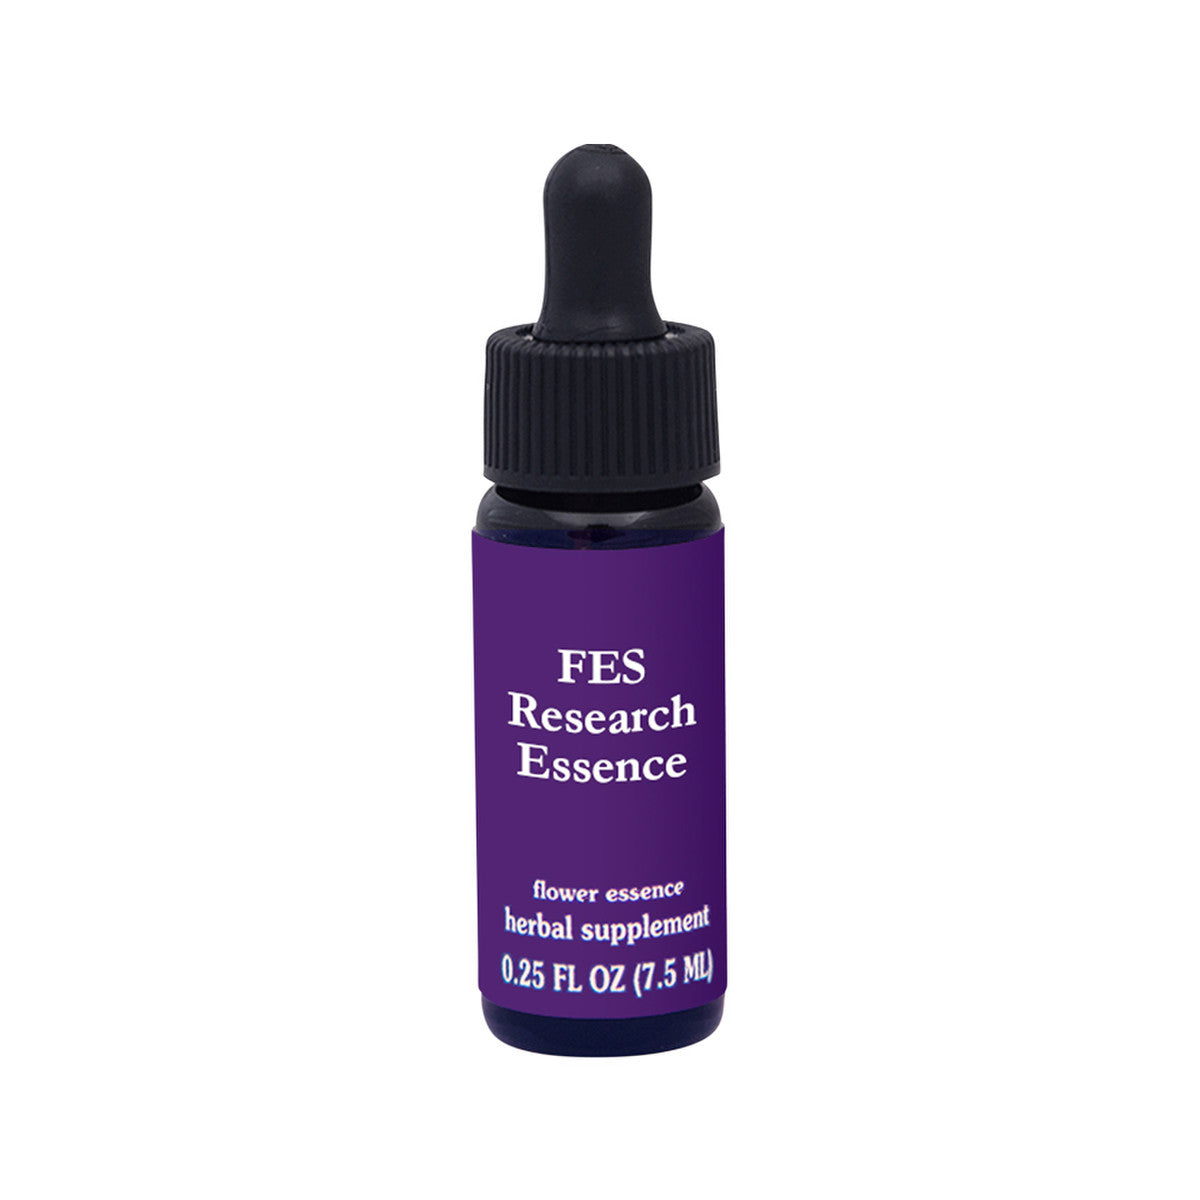 FES Organic Research Flower Essence Feverfew 7.5ml